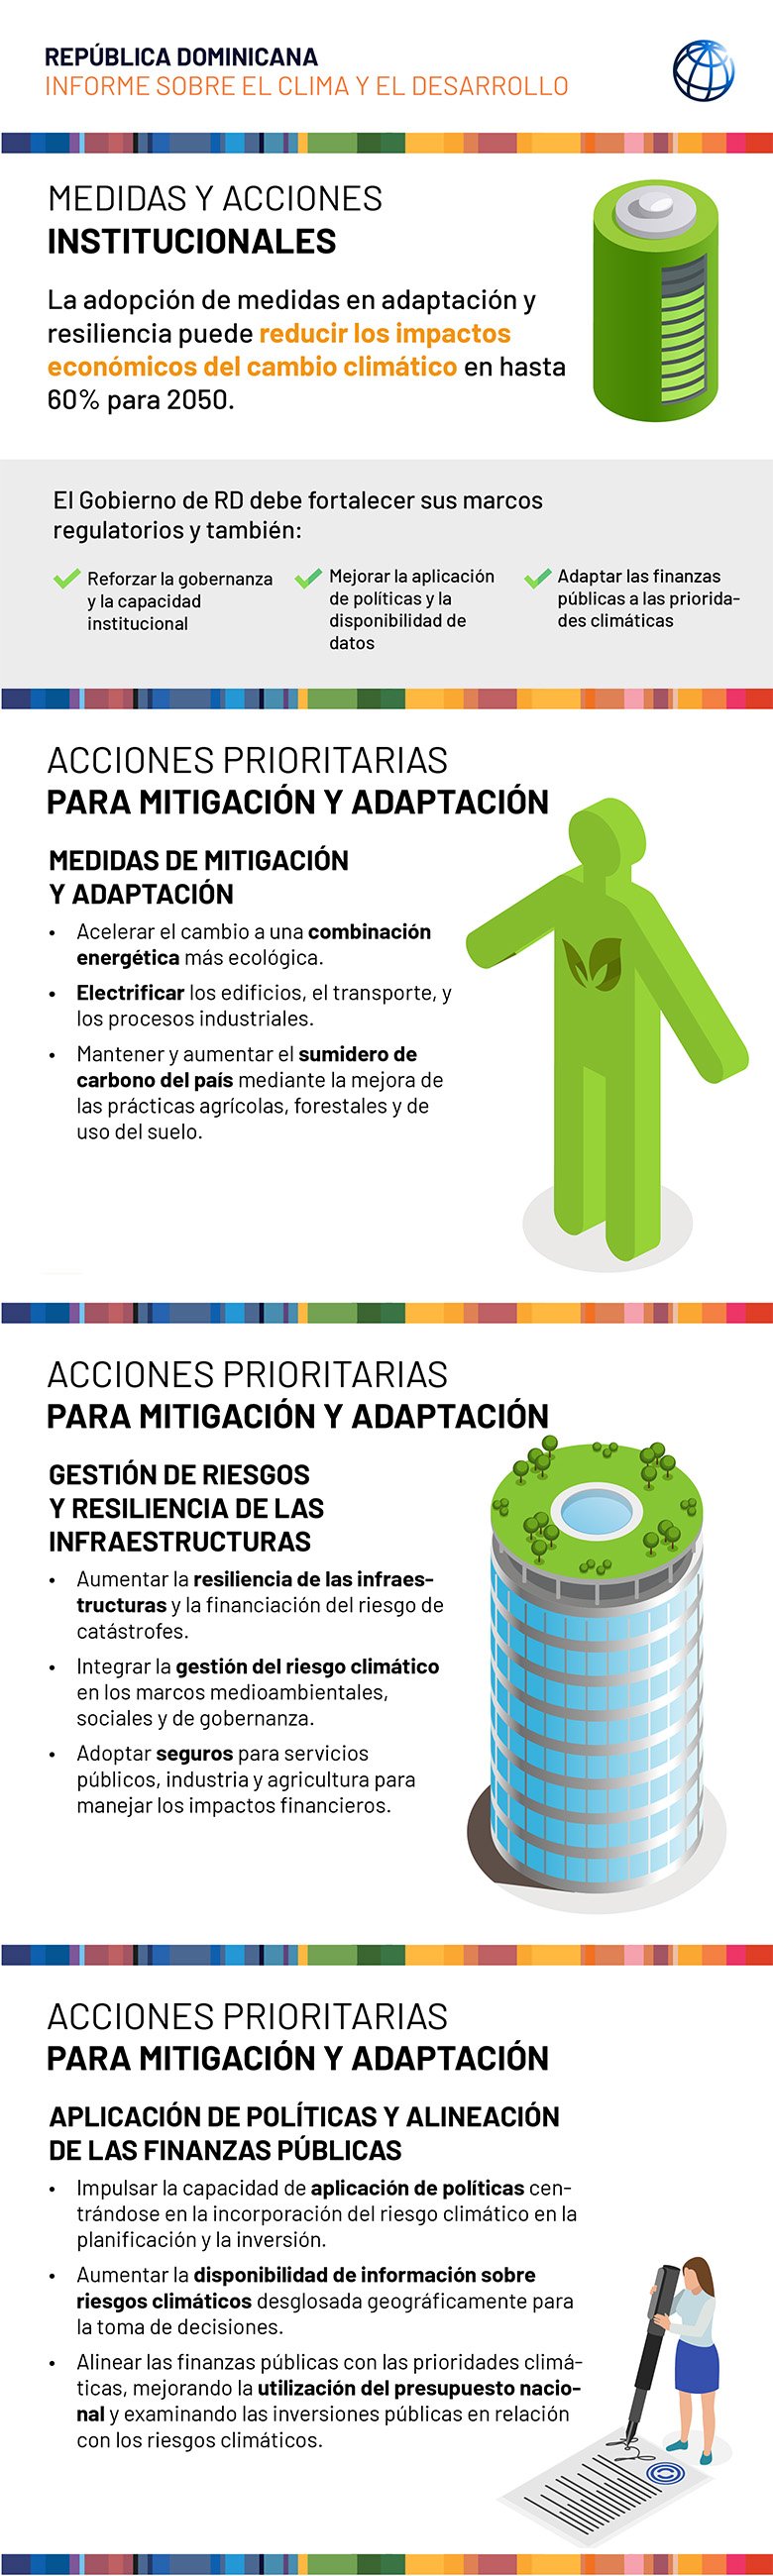 DRCCDR Infographic 3 Spanish